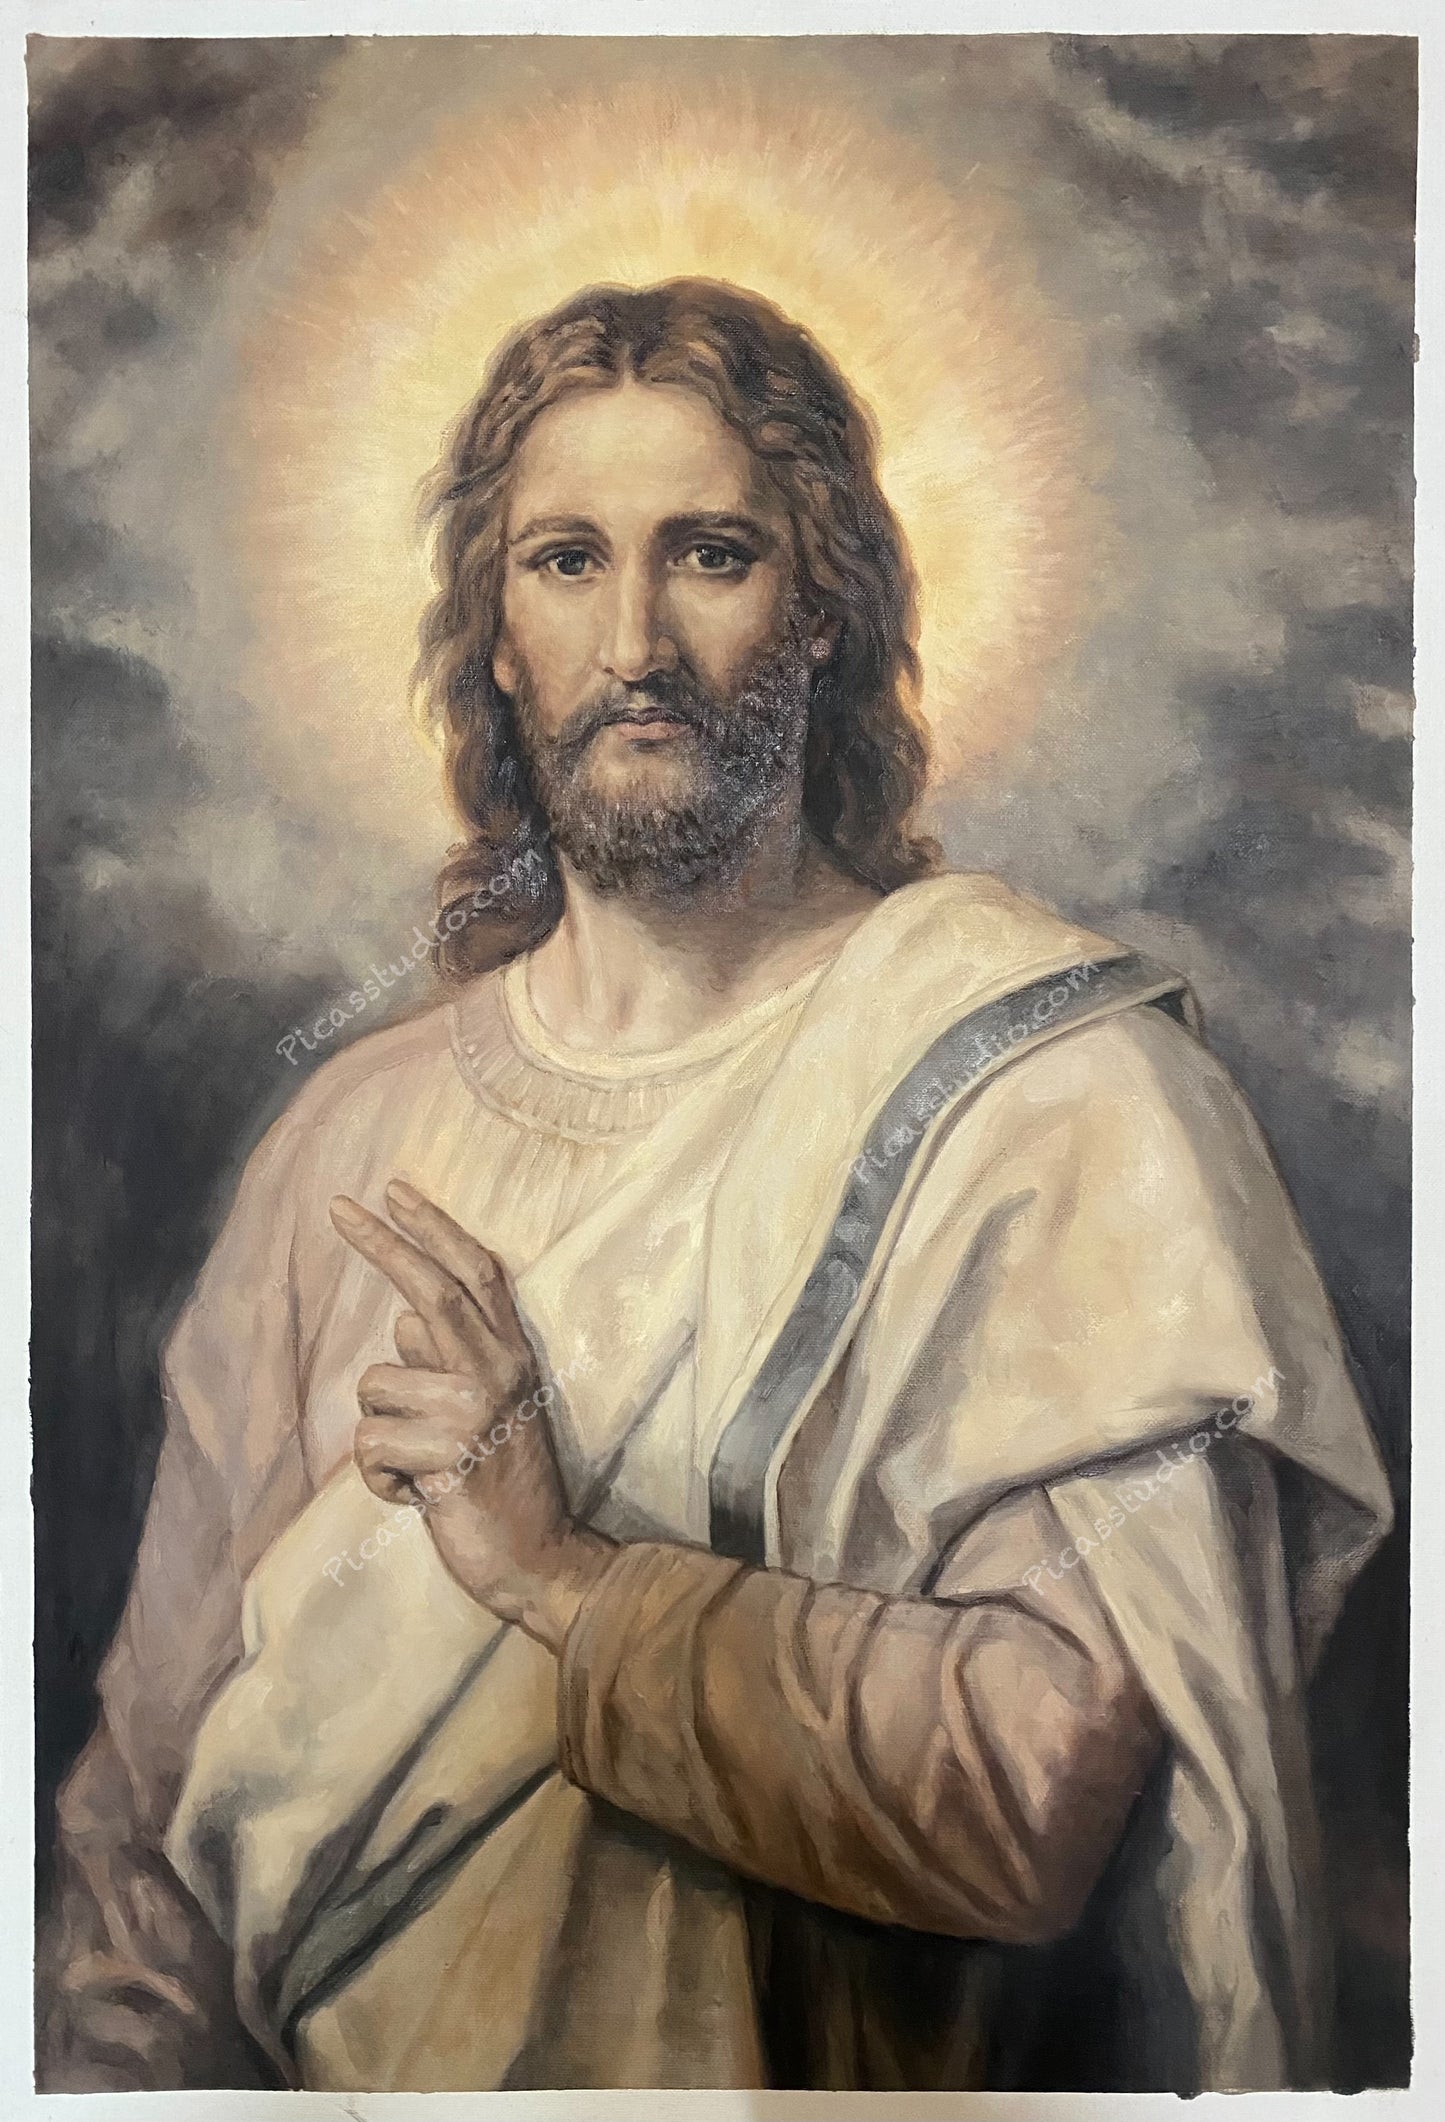 Jesus Christ by Heinrich Hofmann Portrait Oil Painting Hand Painted Art on Canvas Wall Decor Unframed